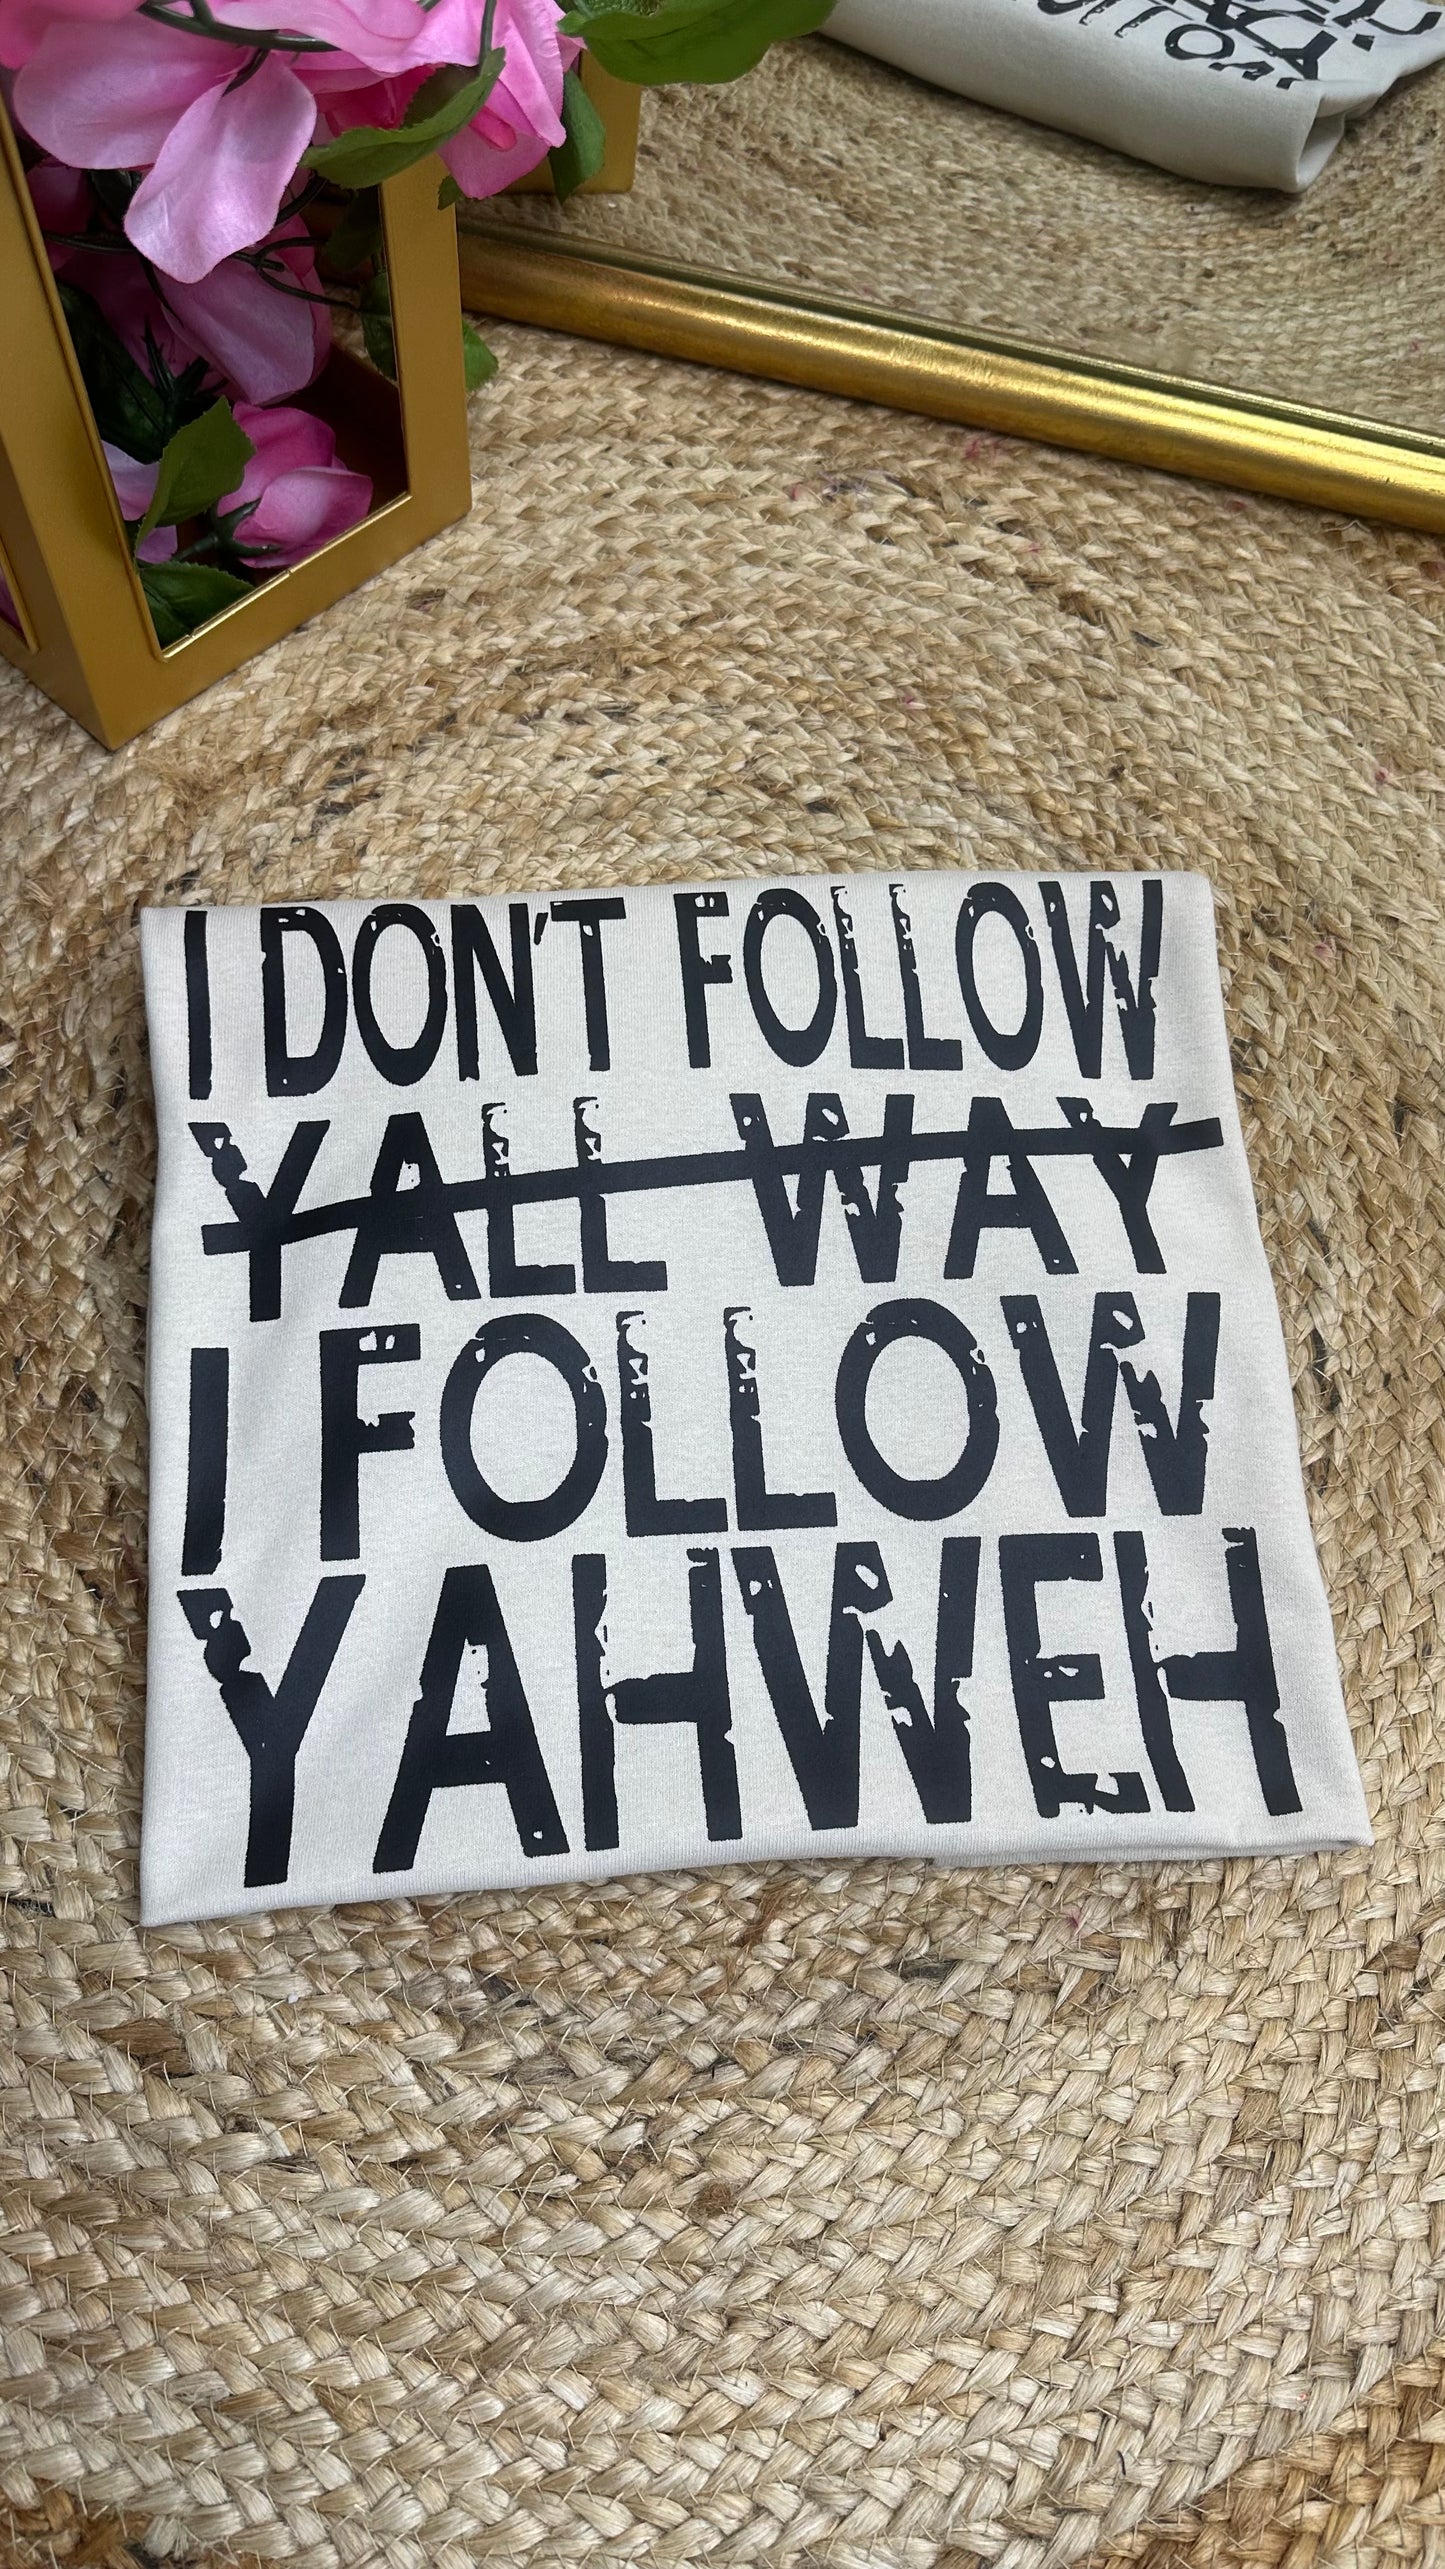 The I don’t follow YALL WAY I follow YAHWEH T-shirt